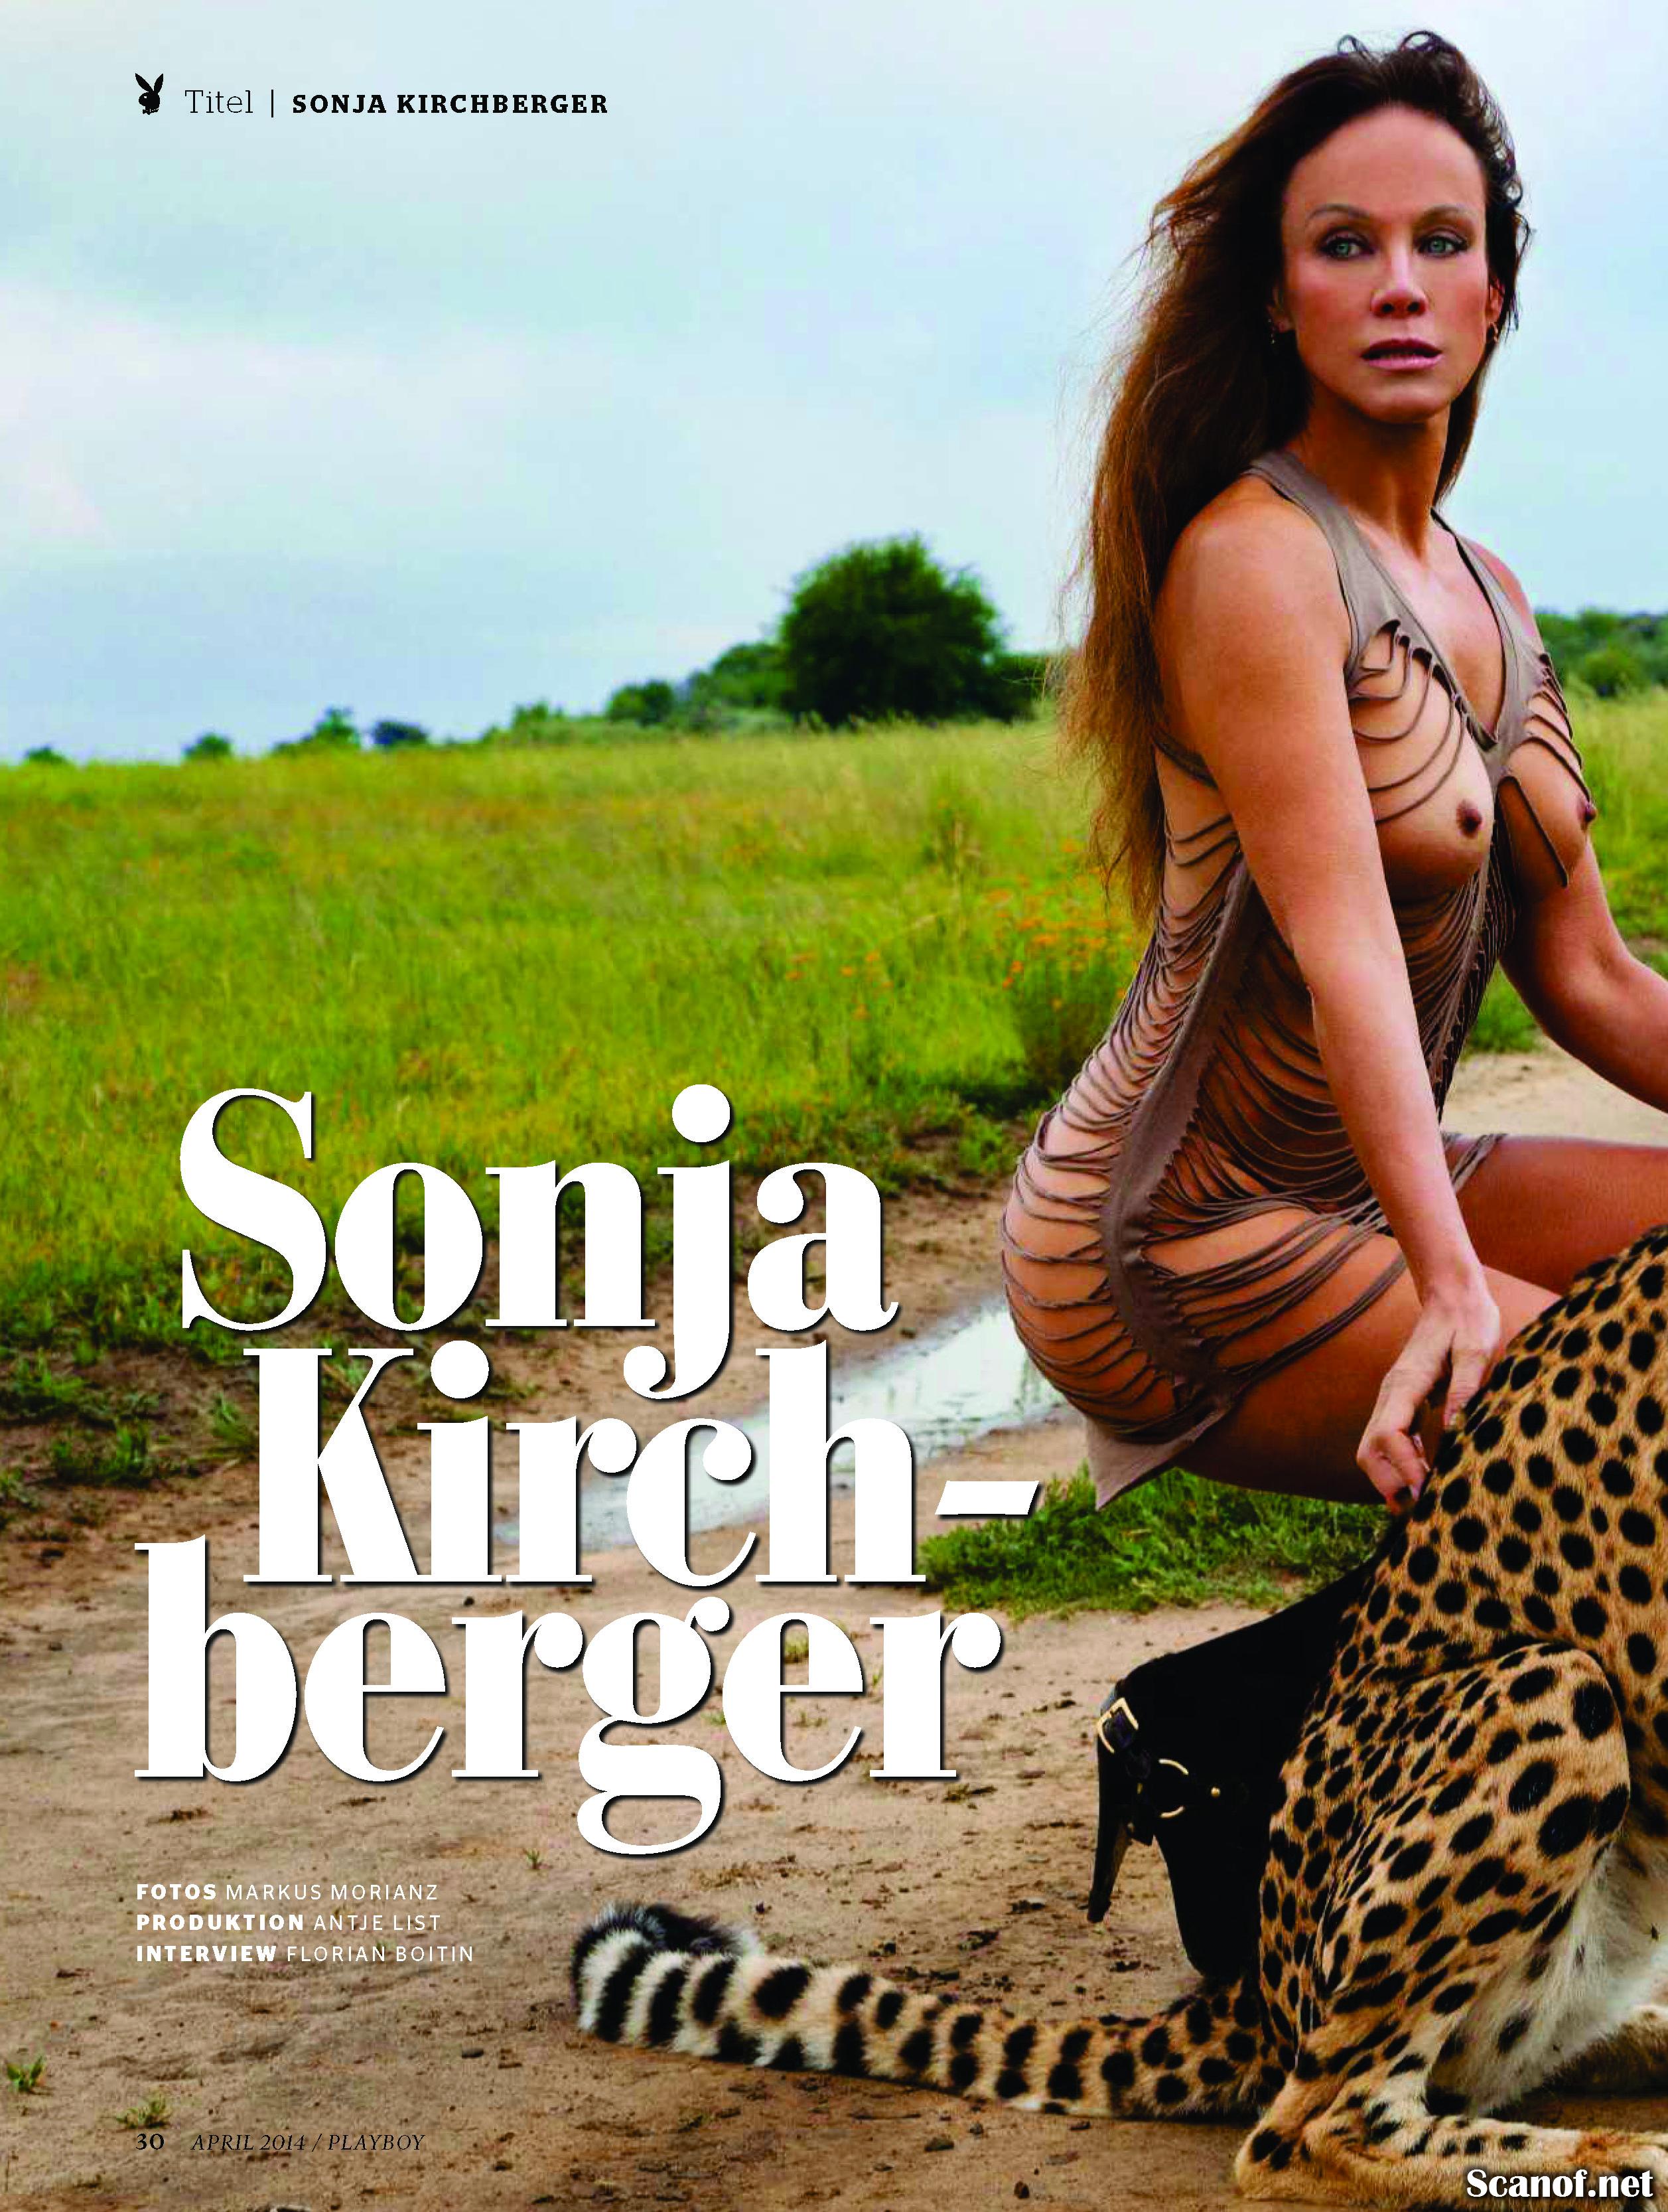 Kirchberger playboy sonja im Sonja Kirchberger